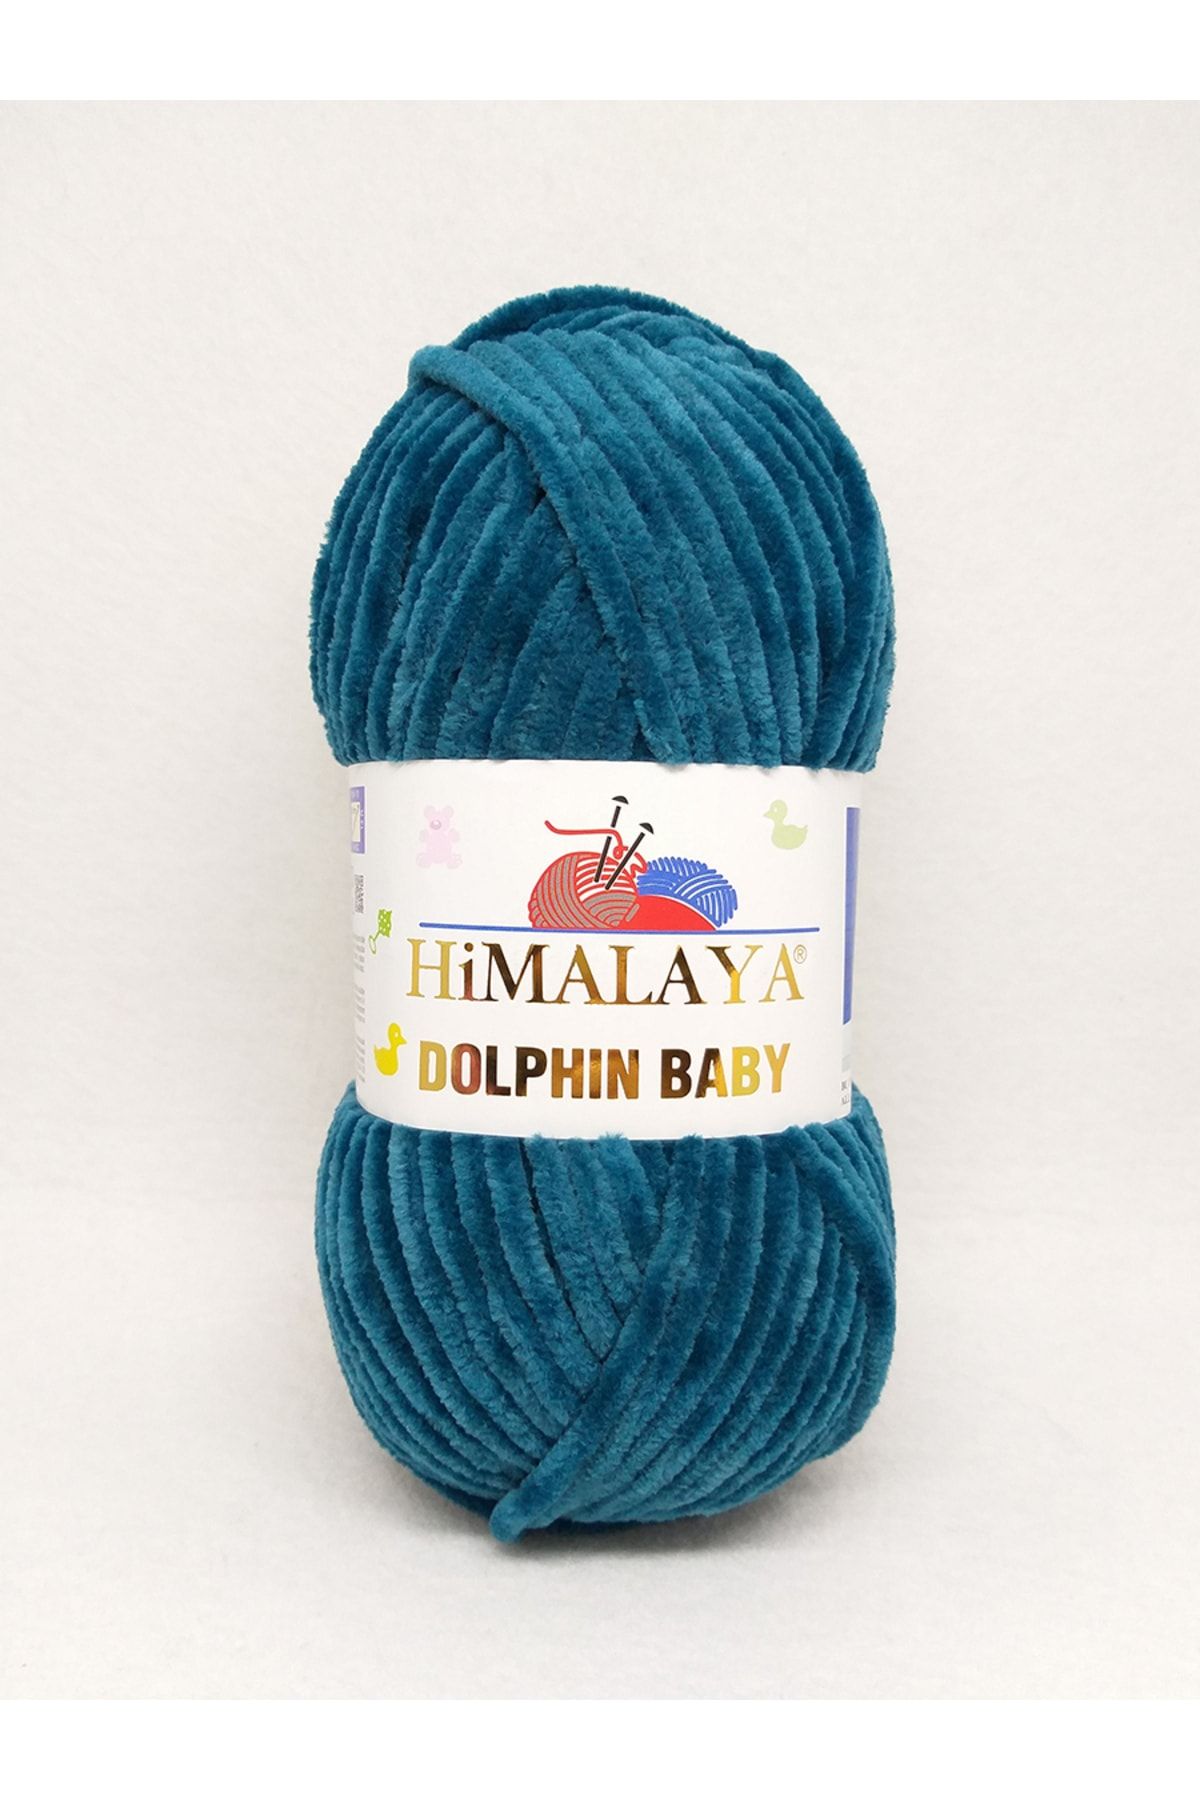 Himalaya Dolphin Baby 80342- 5 Adet Fiyatı, Yorumları - Trendyol